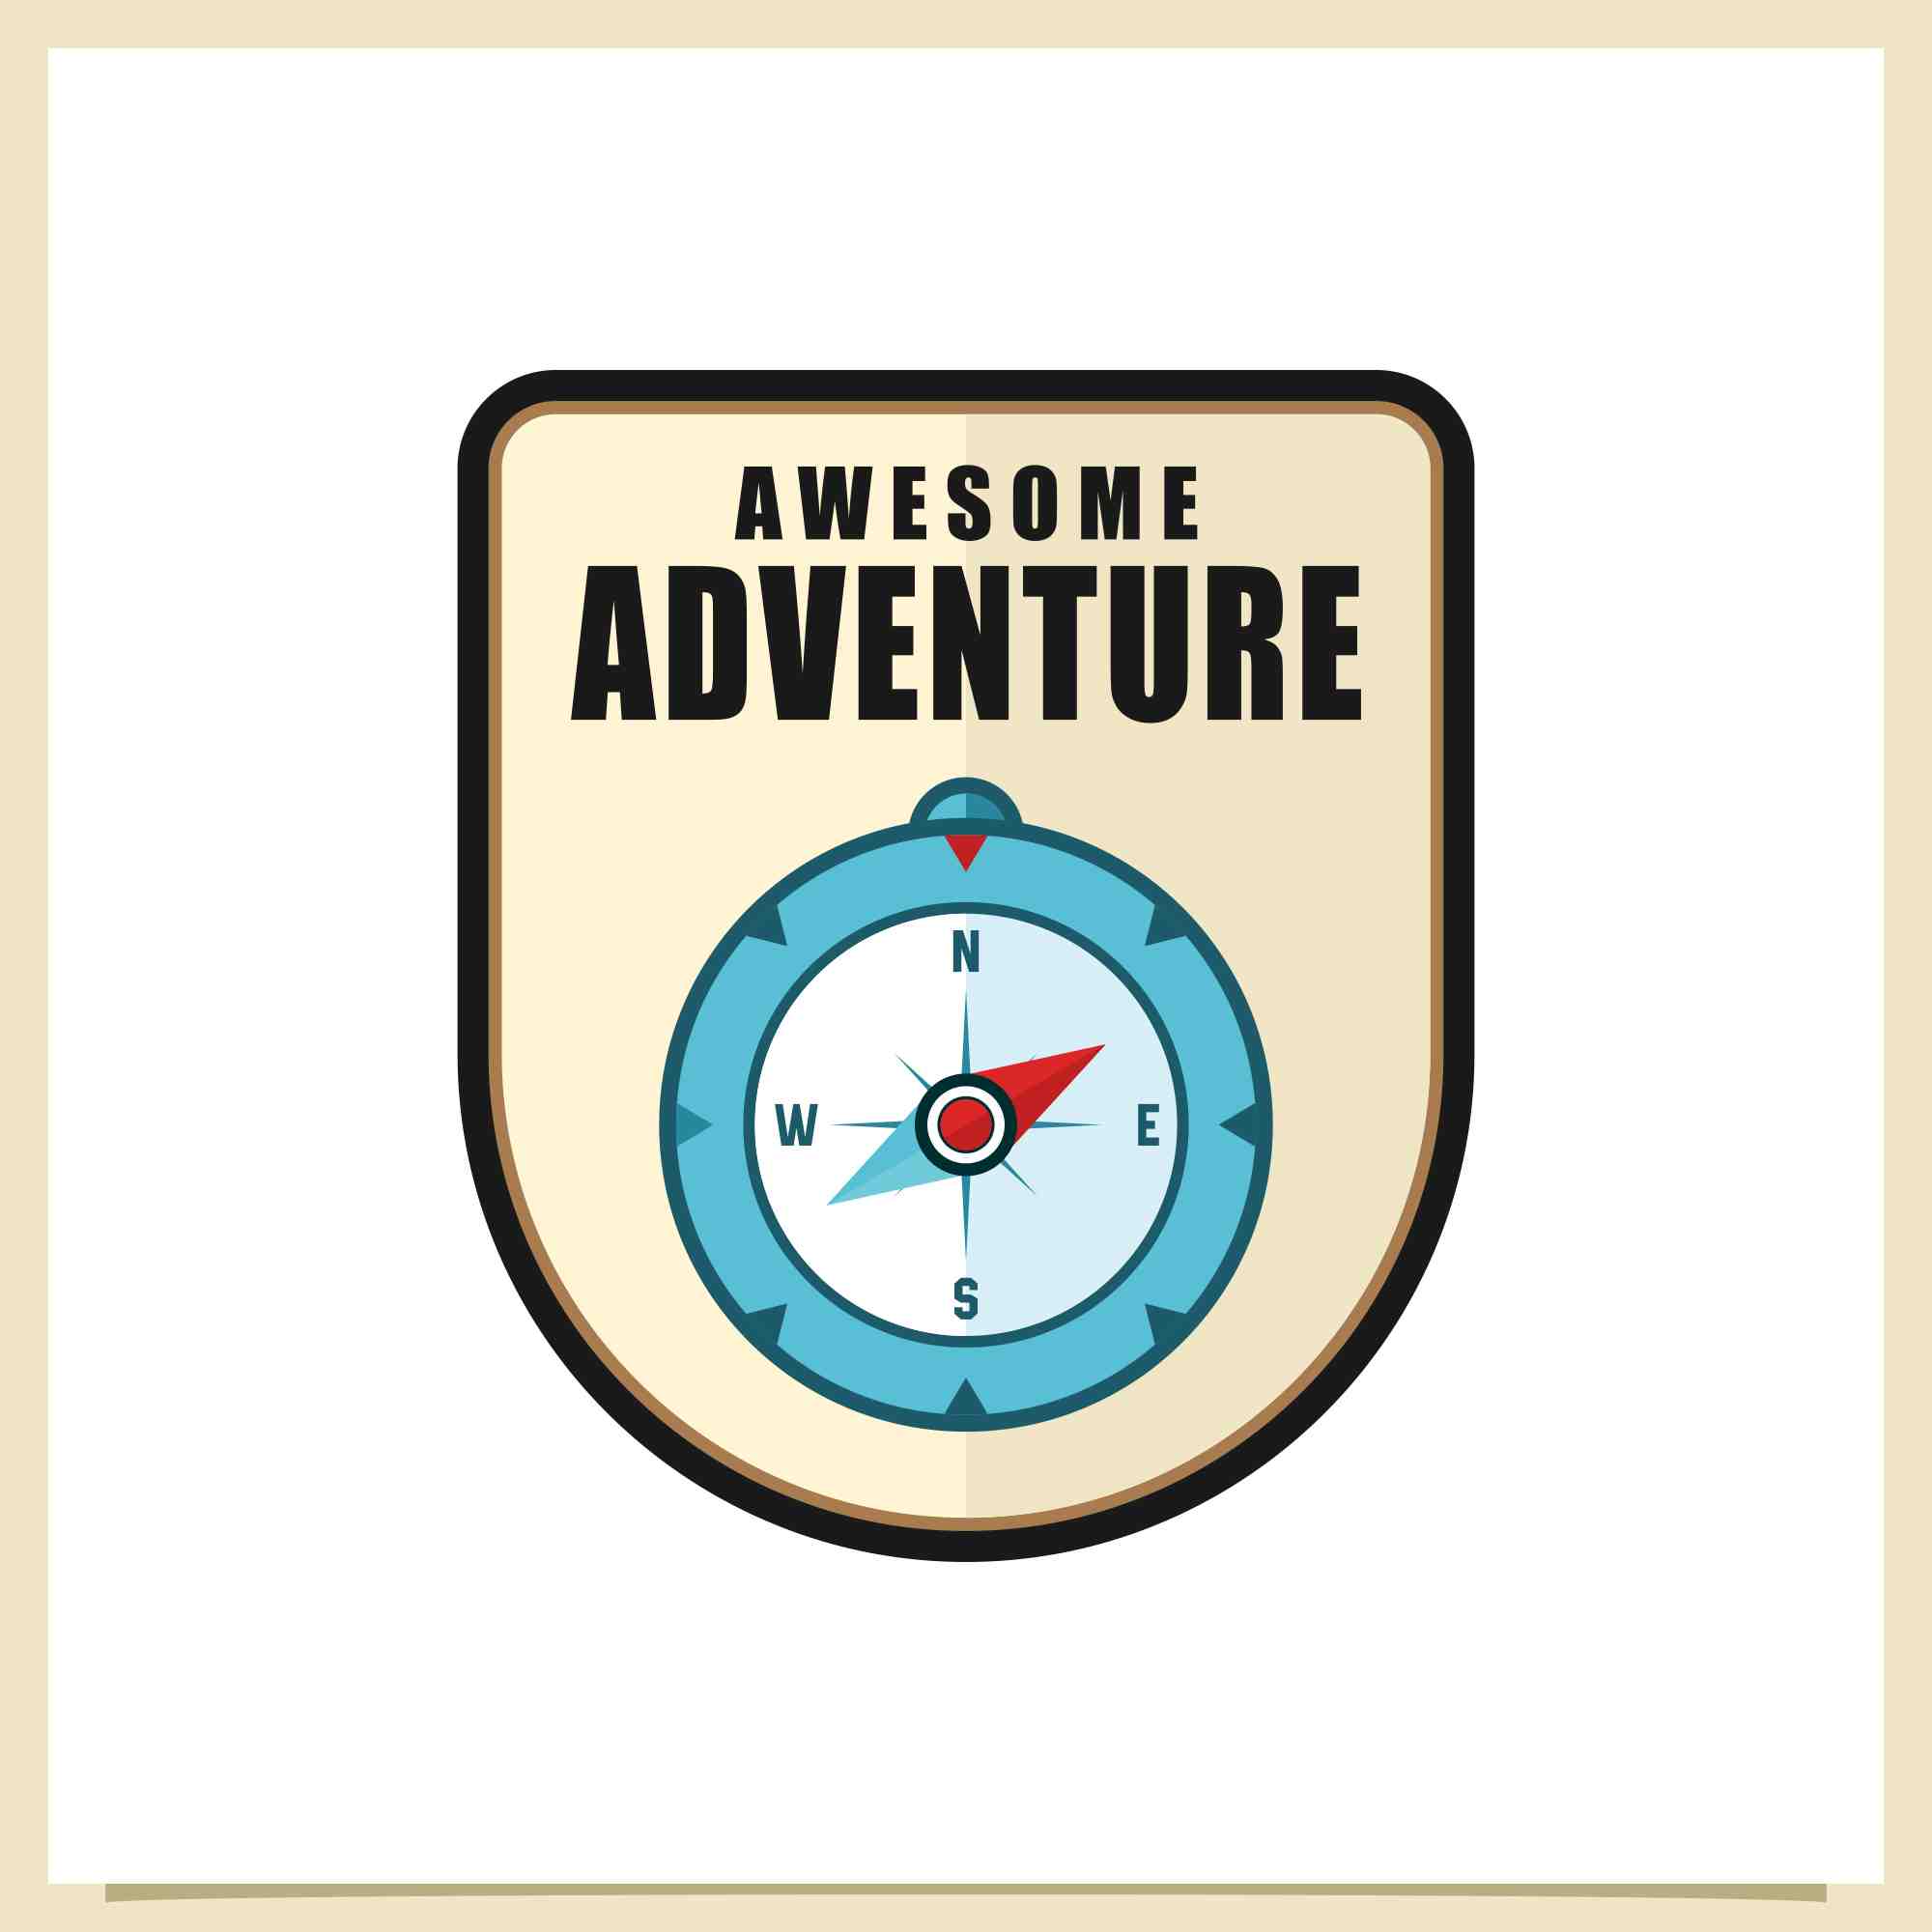 Set Outdoor adventure badge logo design collection - $5 preview image.